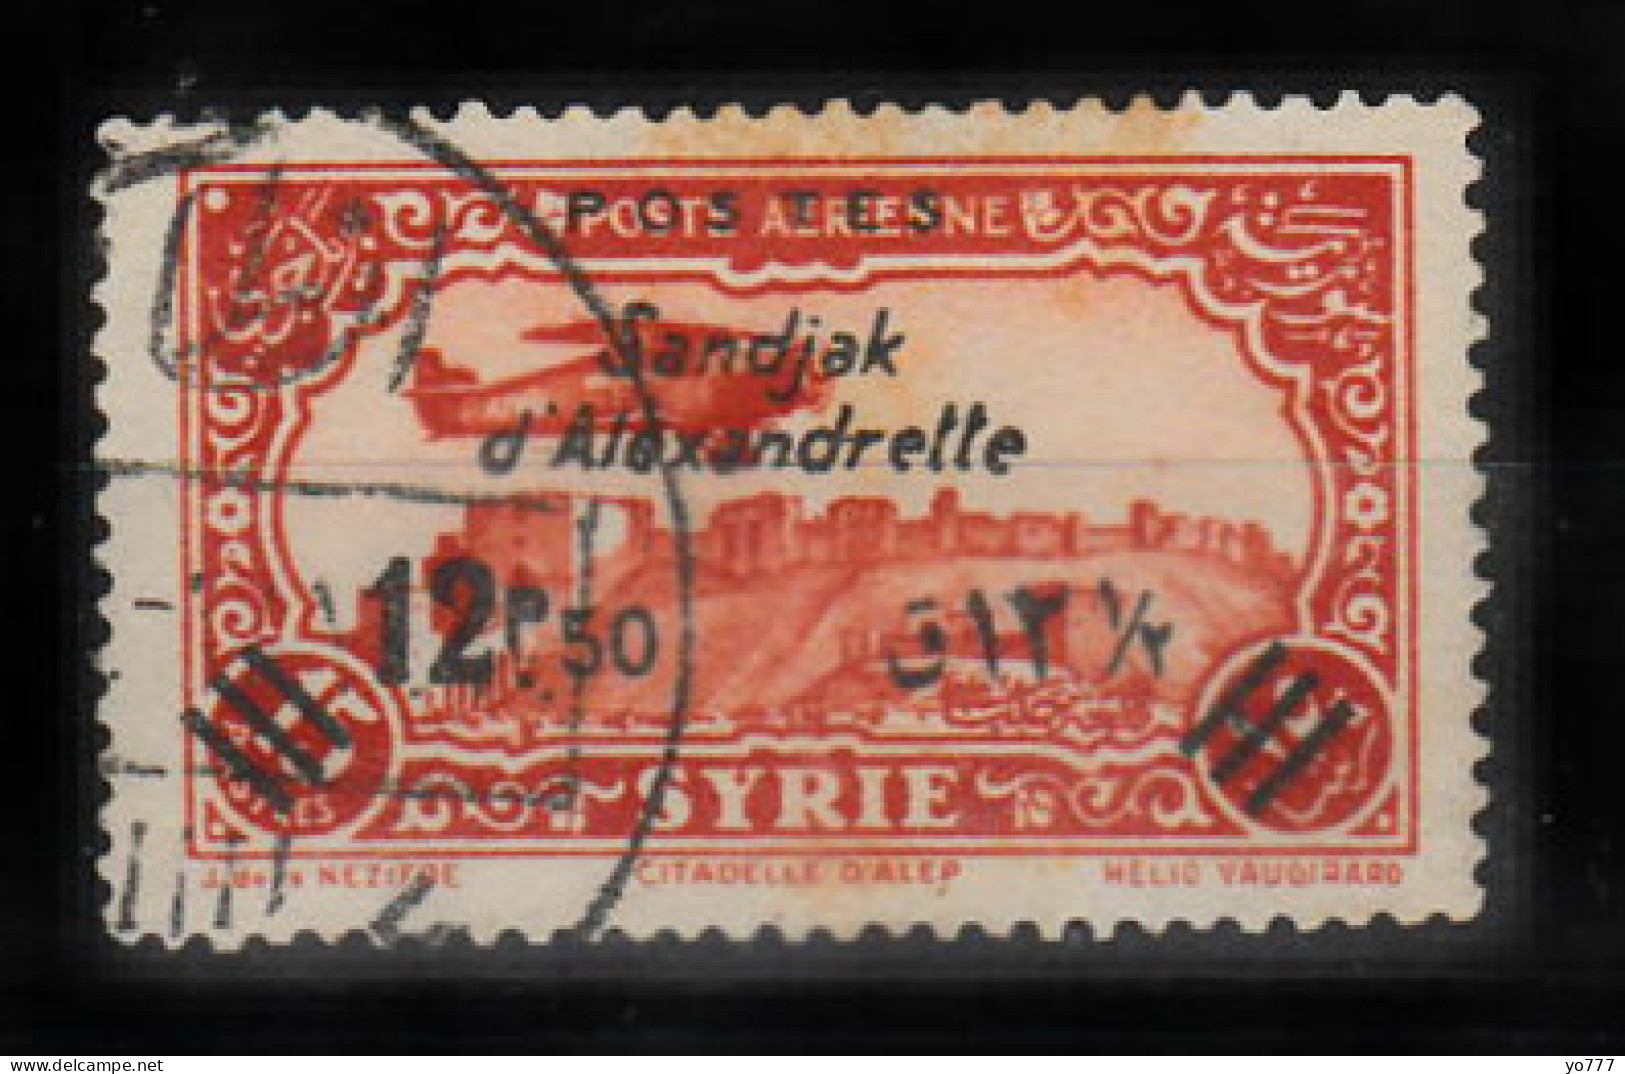 (H-012) 1938 HATAY STAMPS WITH BLACK SANDJAK D'ALEXANDRETTE SURCHARGE ON SYRIA POSTAGE AIRPOST STAMPS USED - 1934-39 Sandschak Alexandrette & Hatay